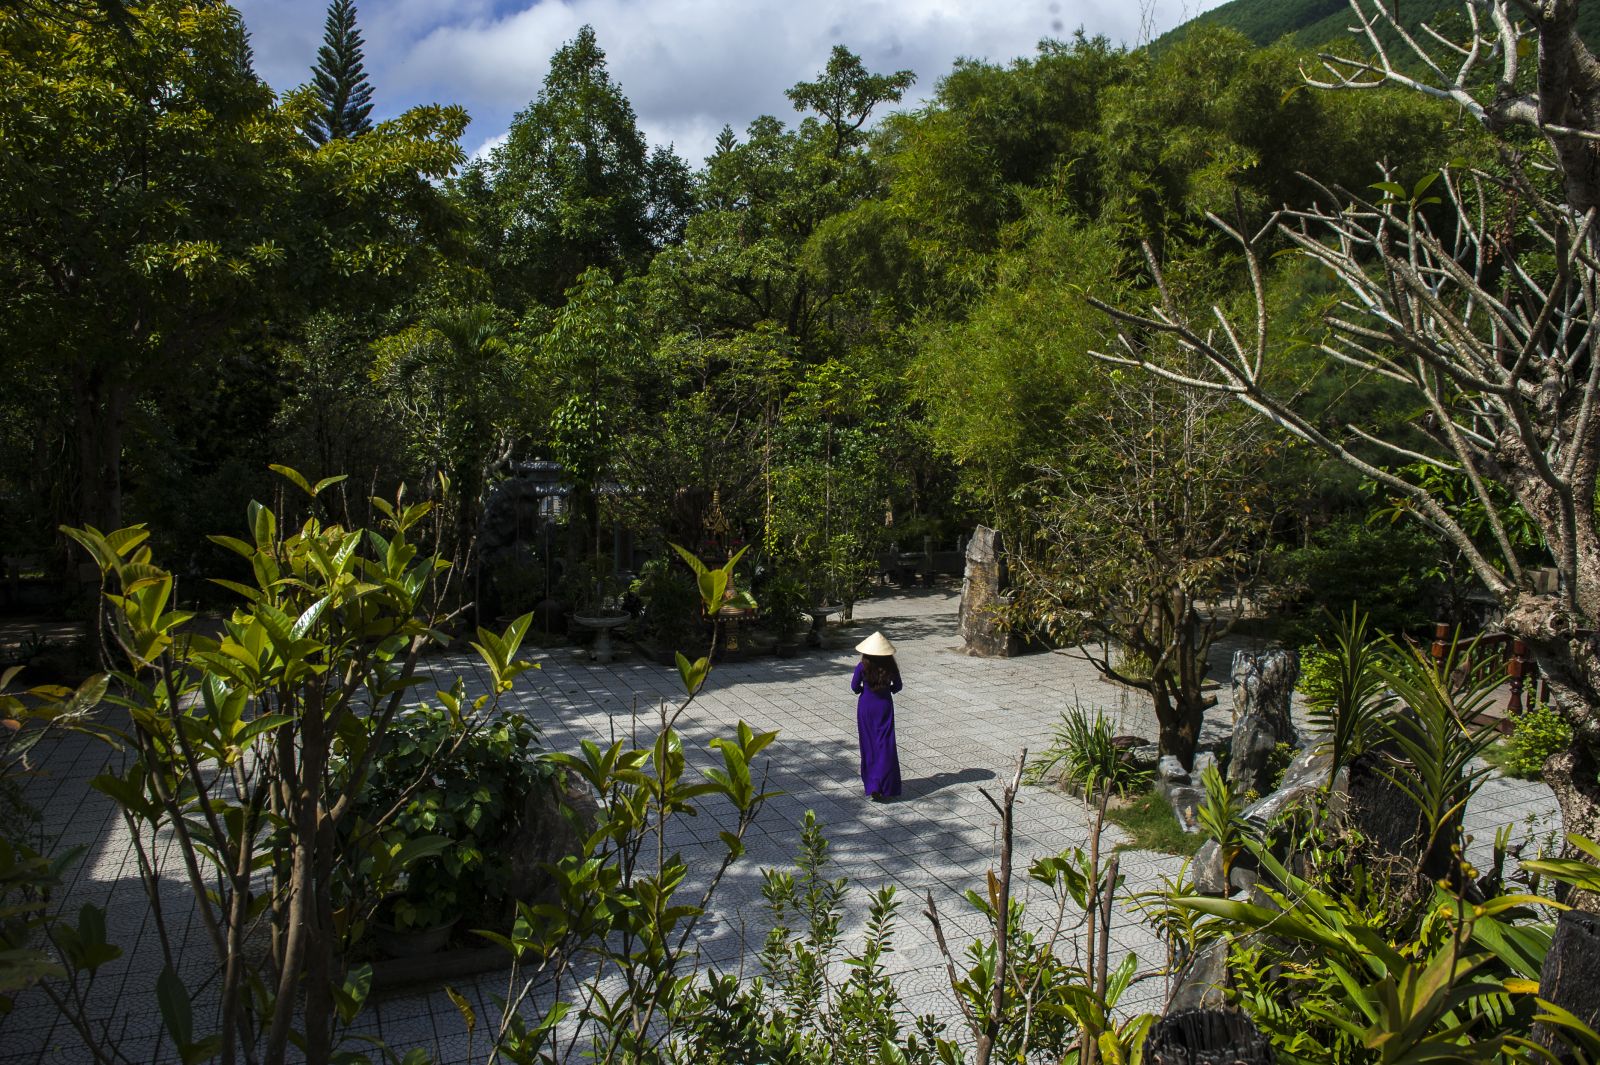 Sightseeing pagoda brings delightful serenity